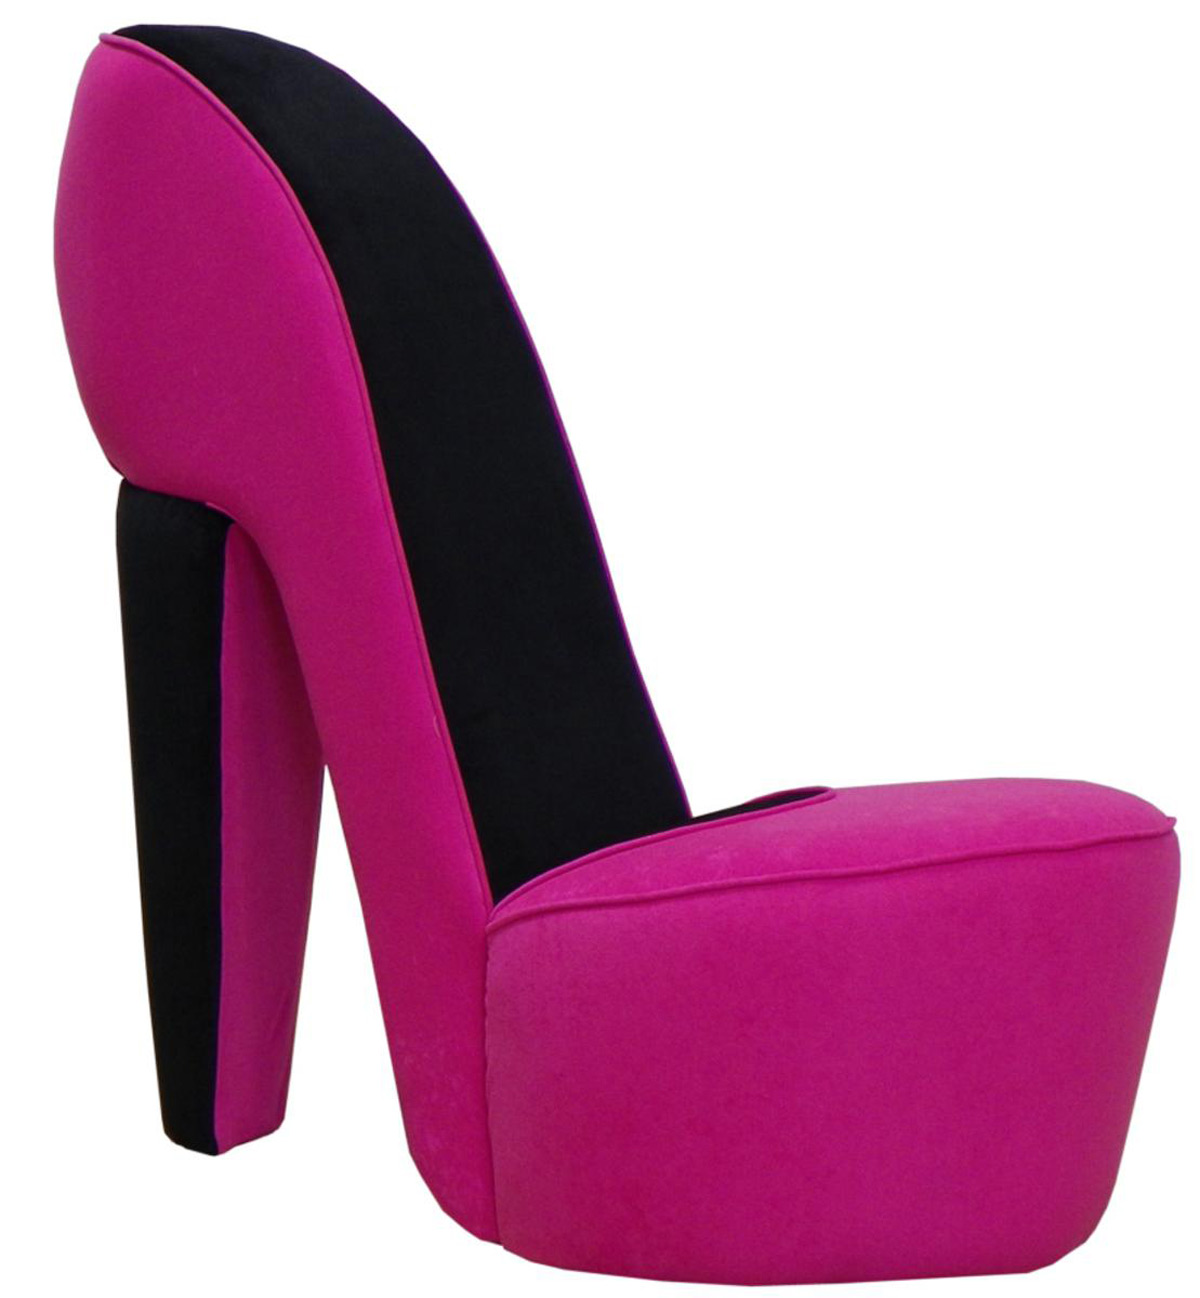 Chelsea Home Queen Shoe Chair - Hot Pink